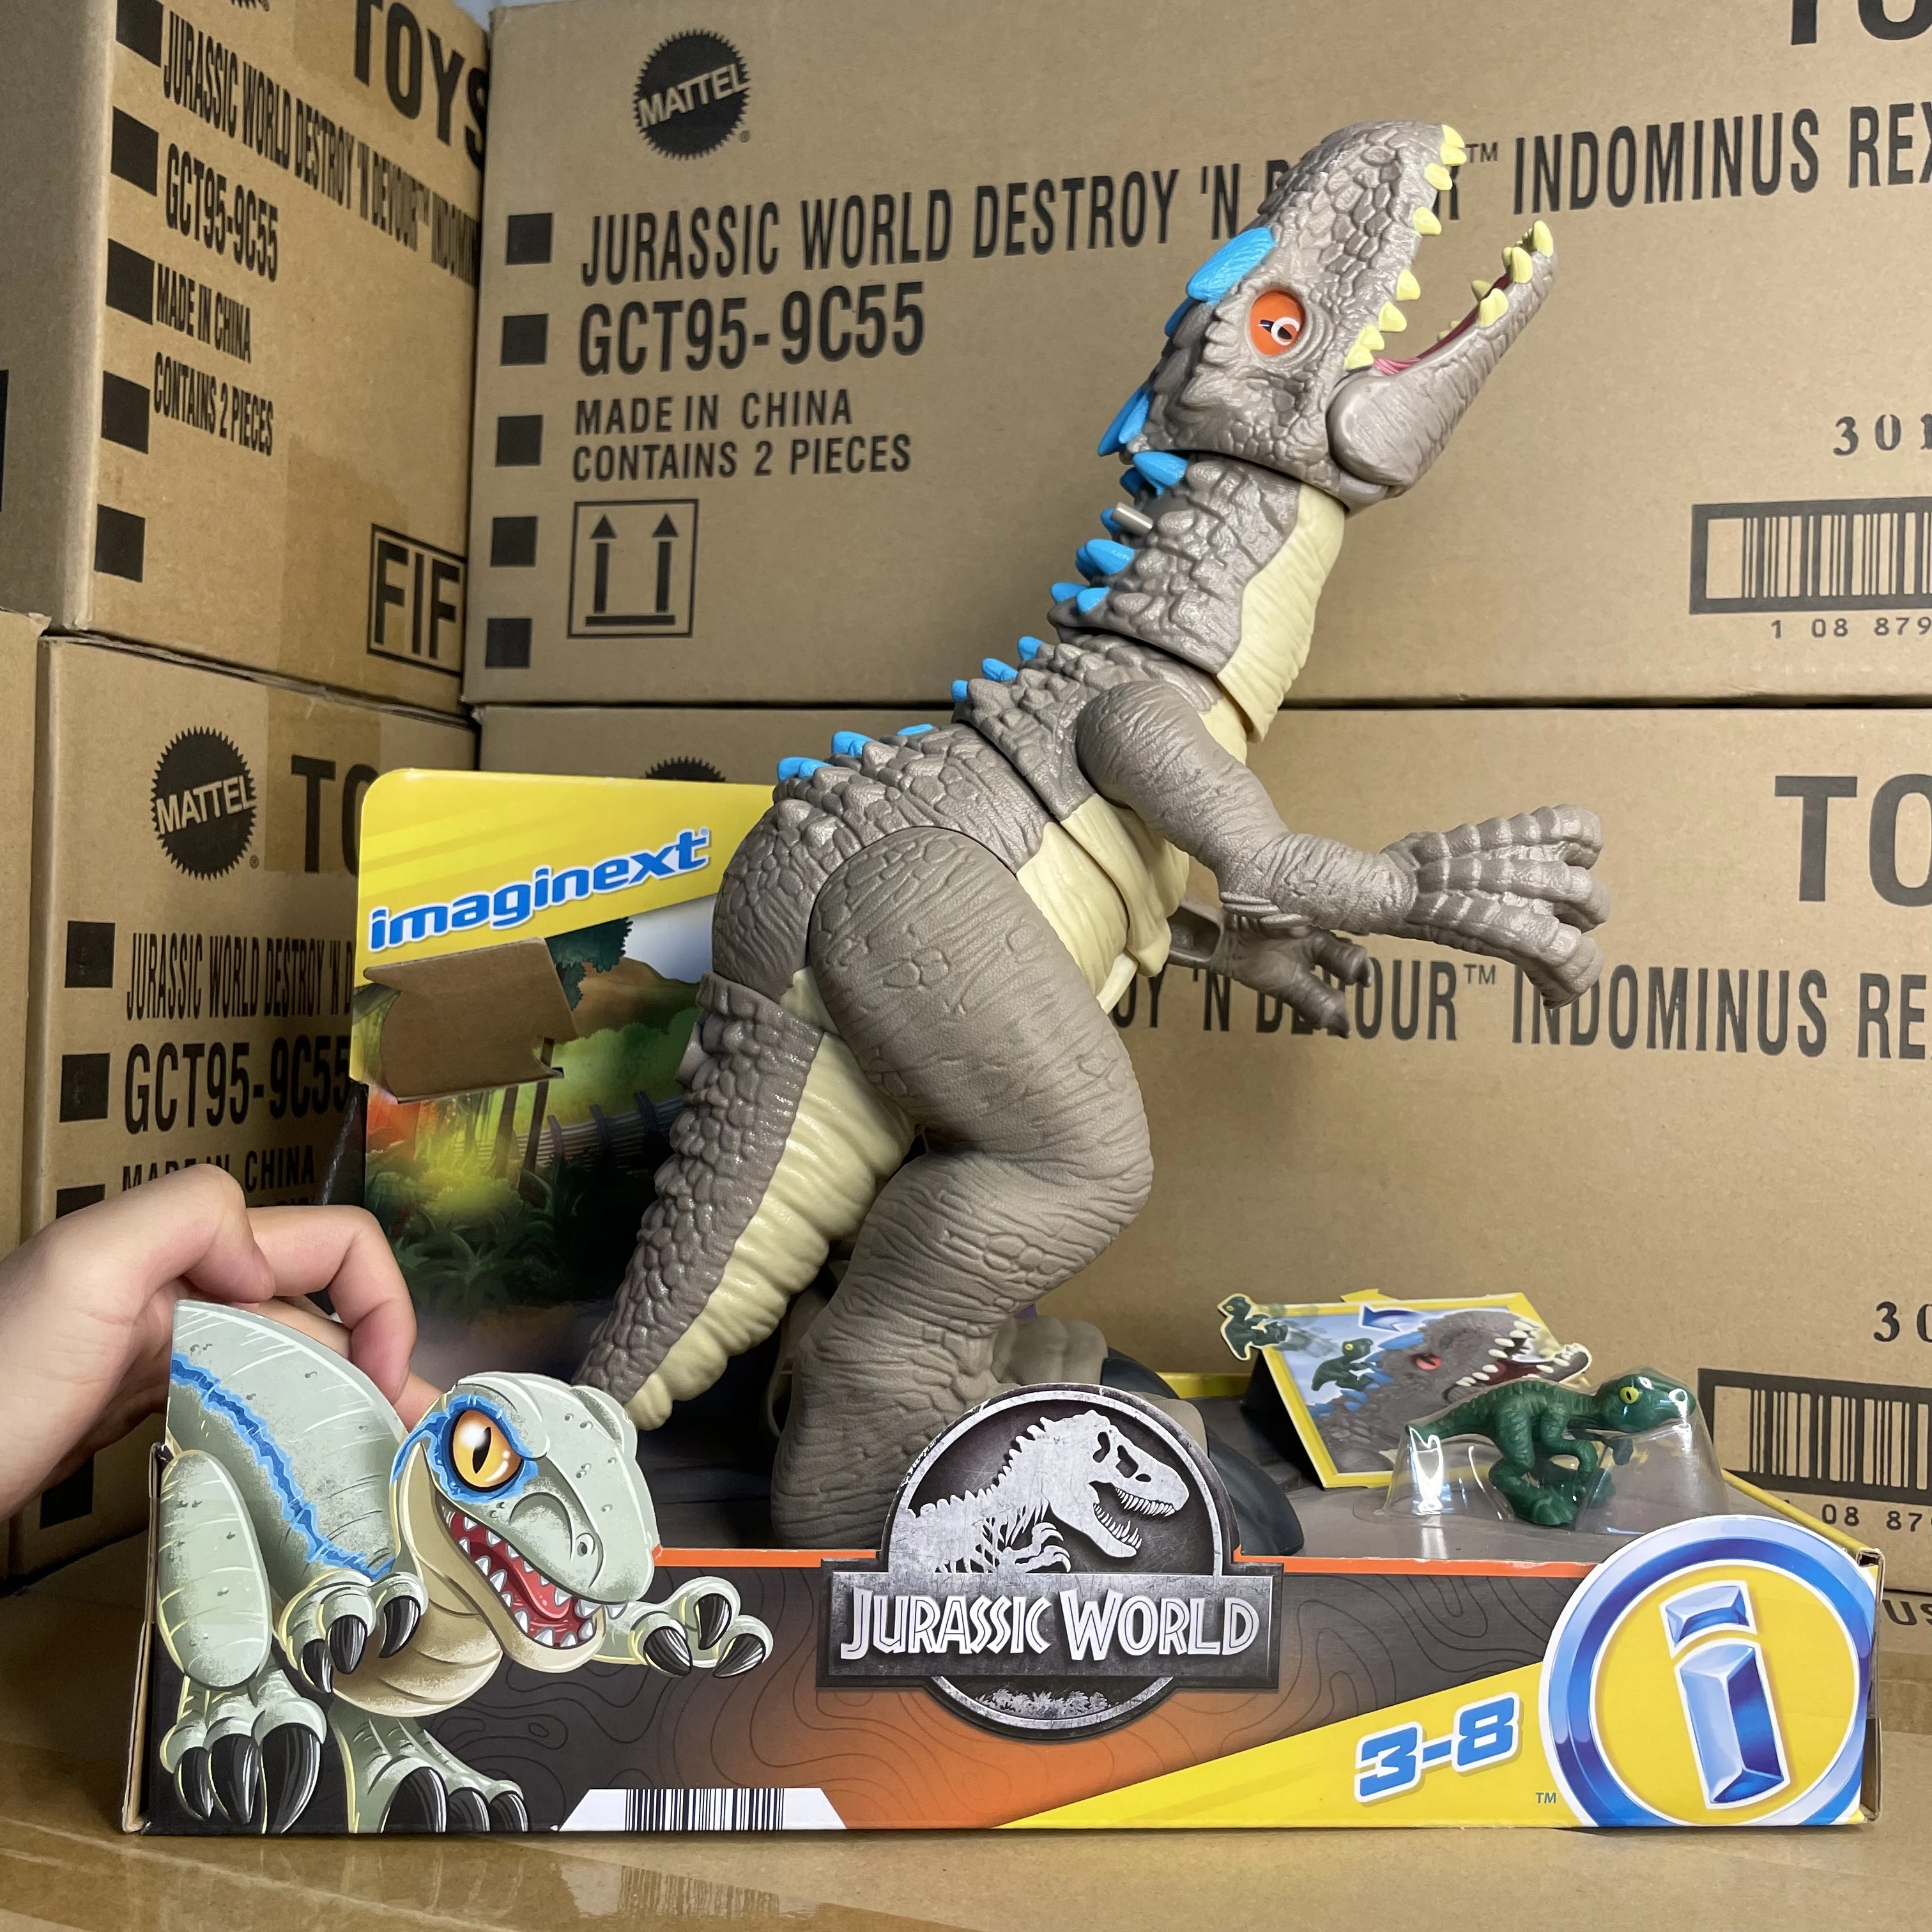 Mattel Jurassic World Indominus Rex Thrashing Action Figure Dinosaur Toy  Children's Birthday Gift Imaginext Fisher-price Gmr16 - Action Figures -